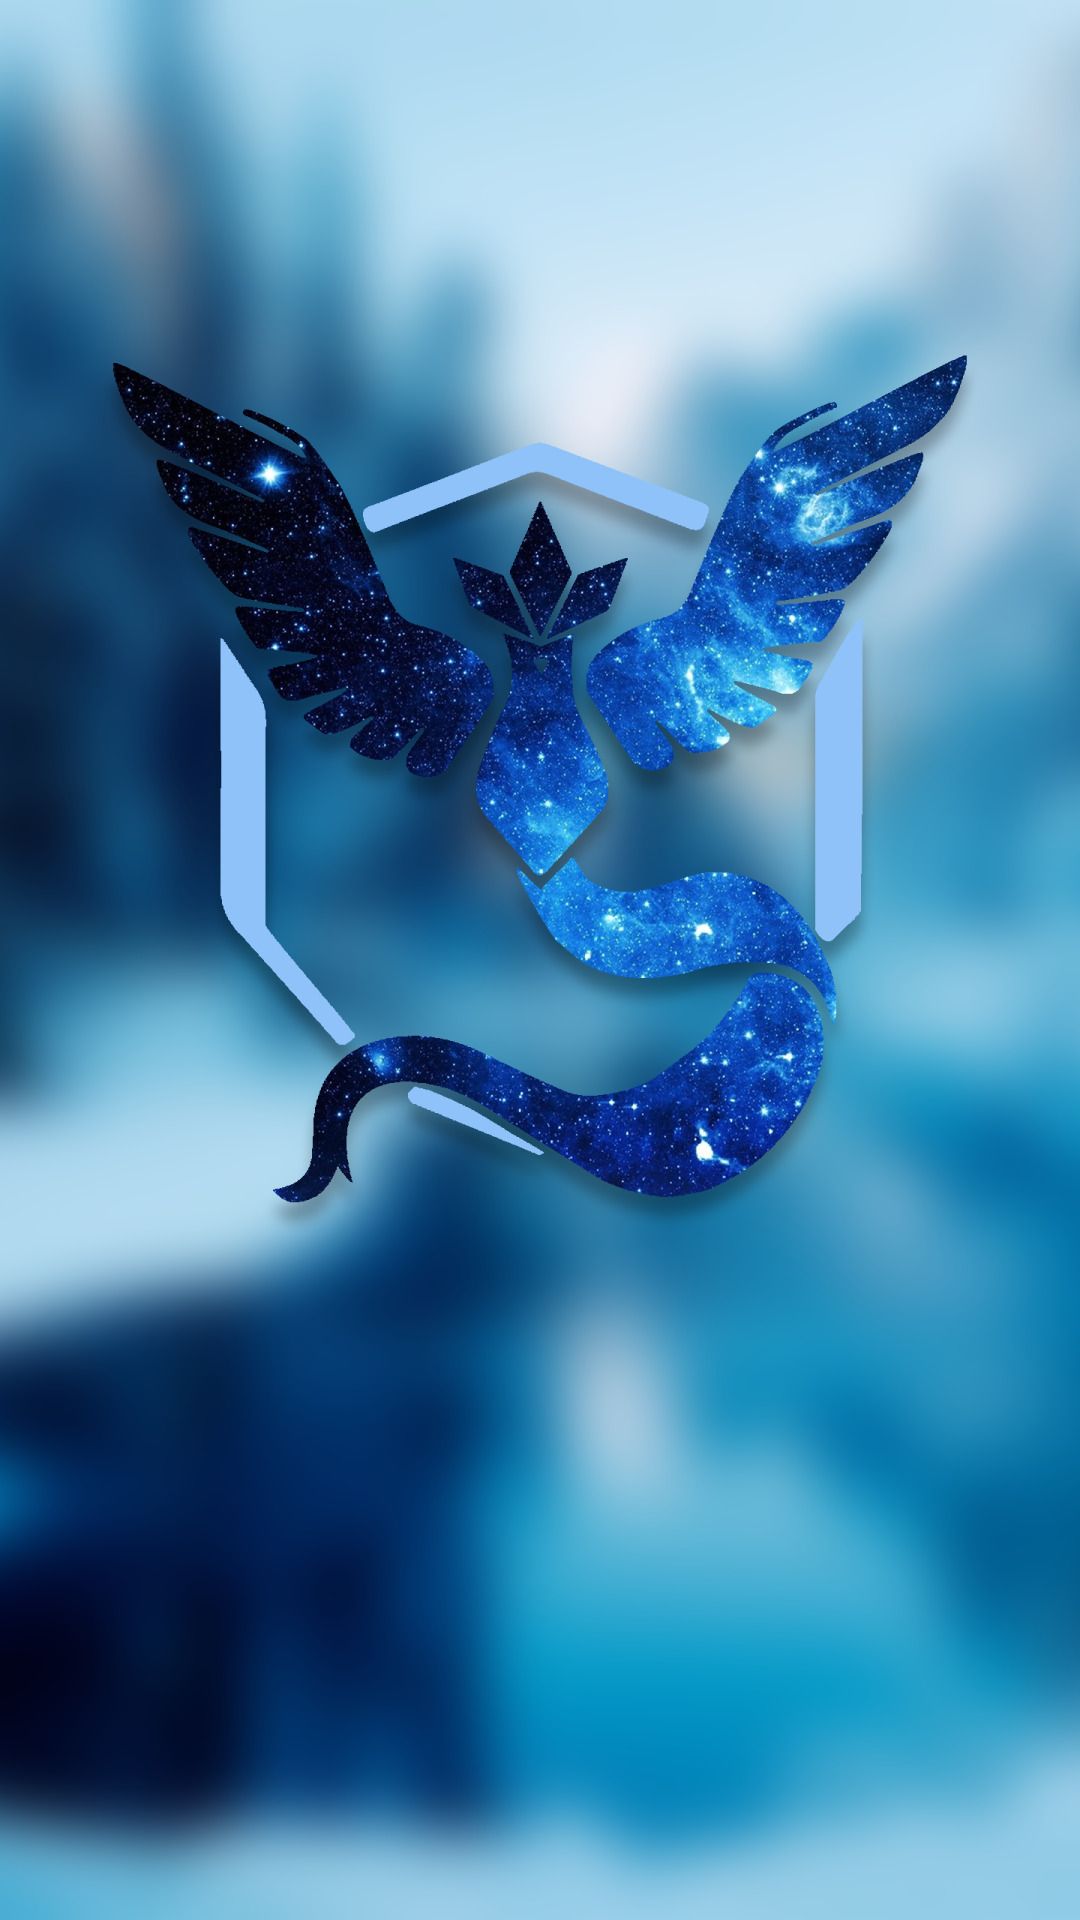 team mystic live wallpaper,blue,cobalt blue,water,electric blue,fictional character